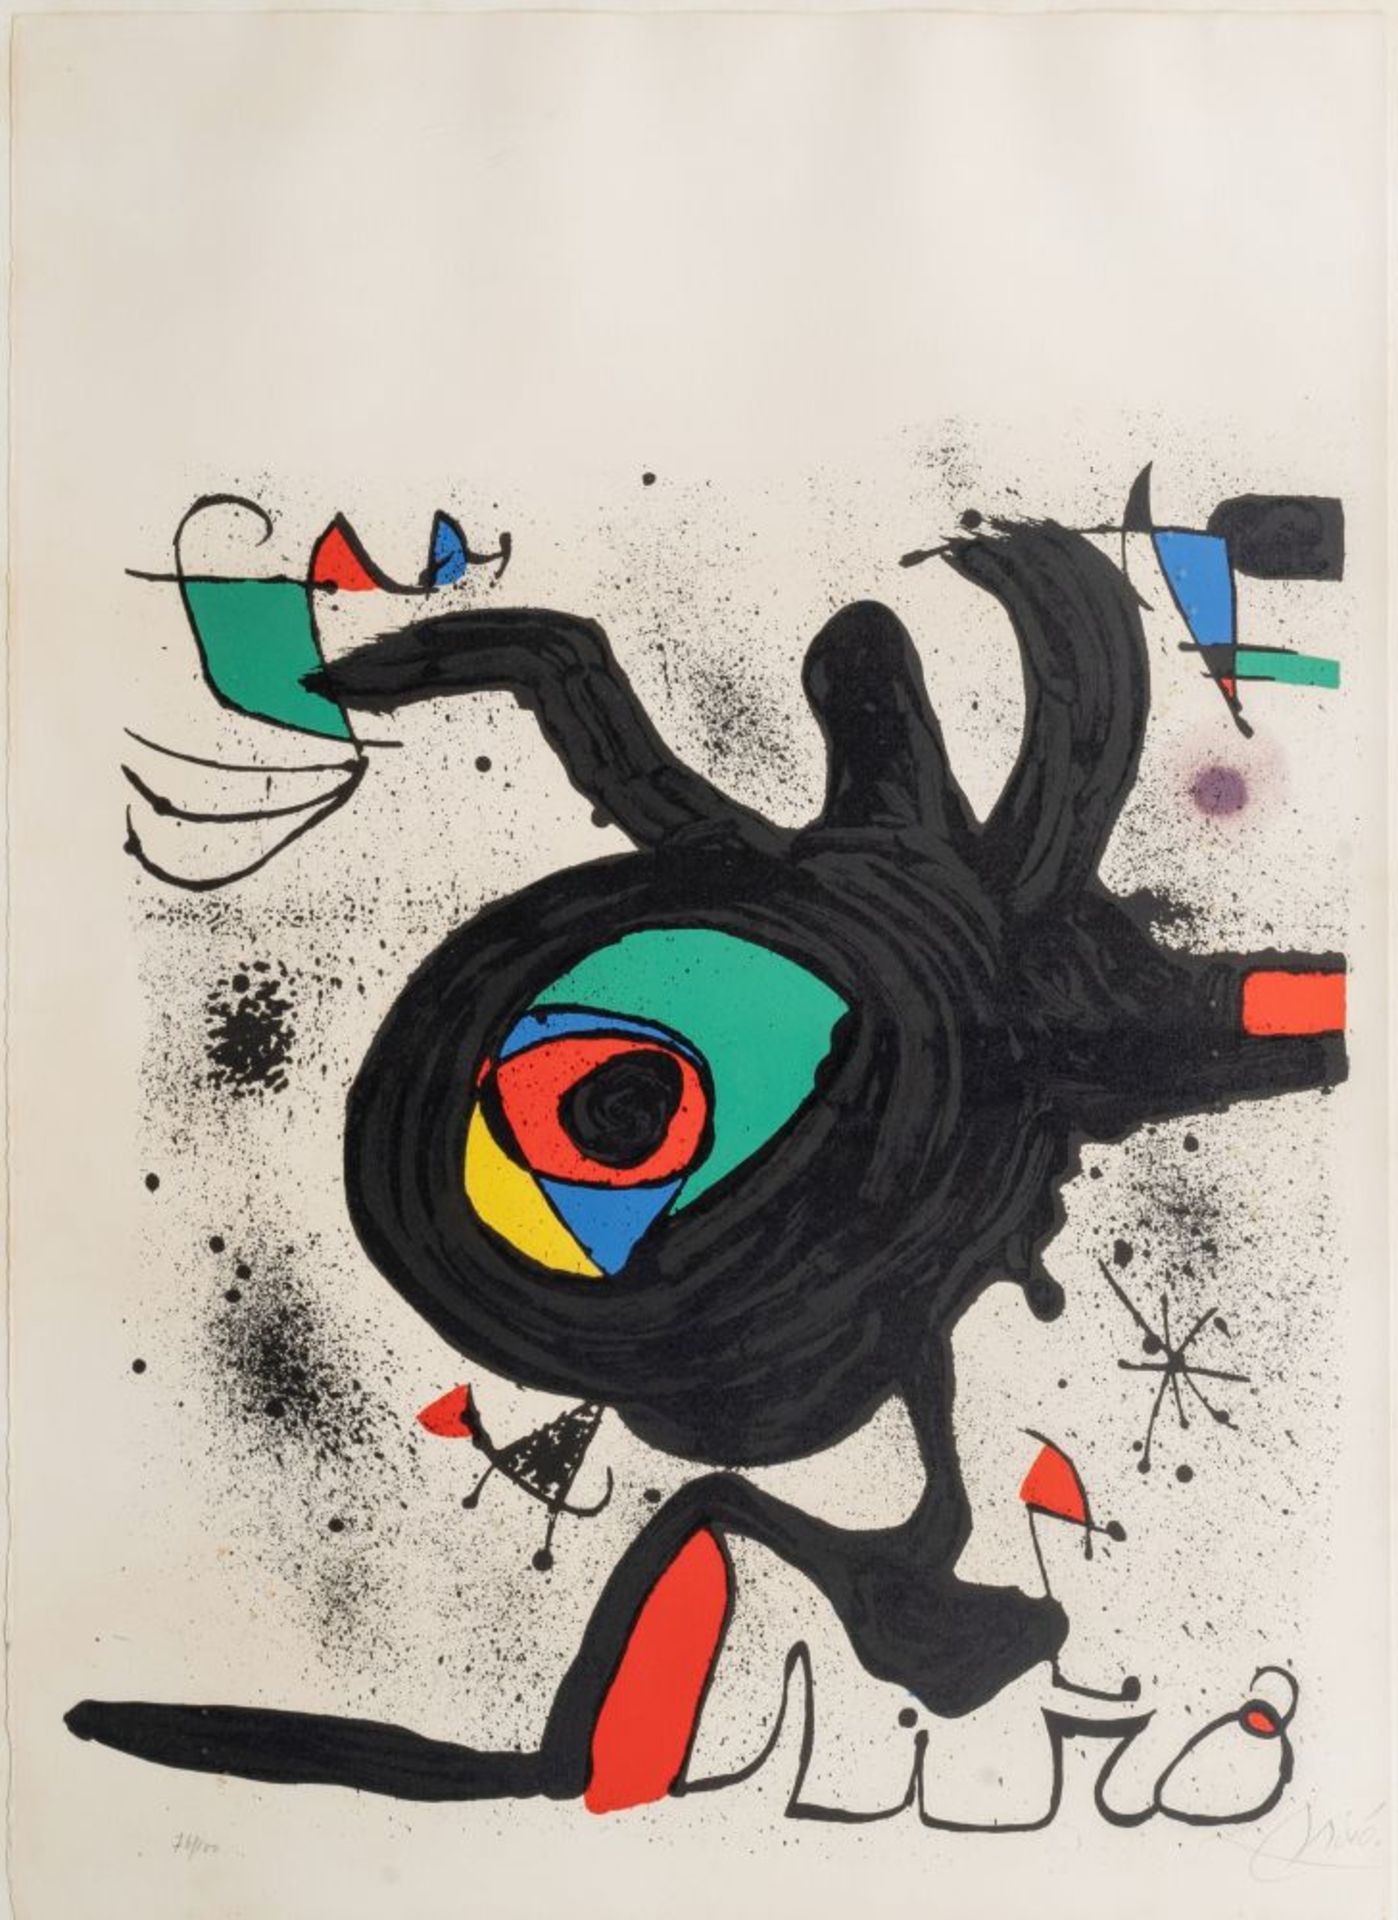 Joan Miró (Barcelona 1893 - Palma de Mallorca 1983). Das graphische Werk - Kunstverein Hamburg.